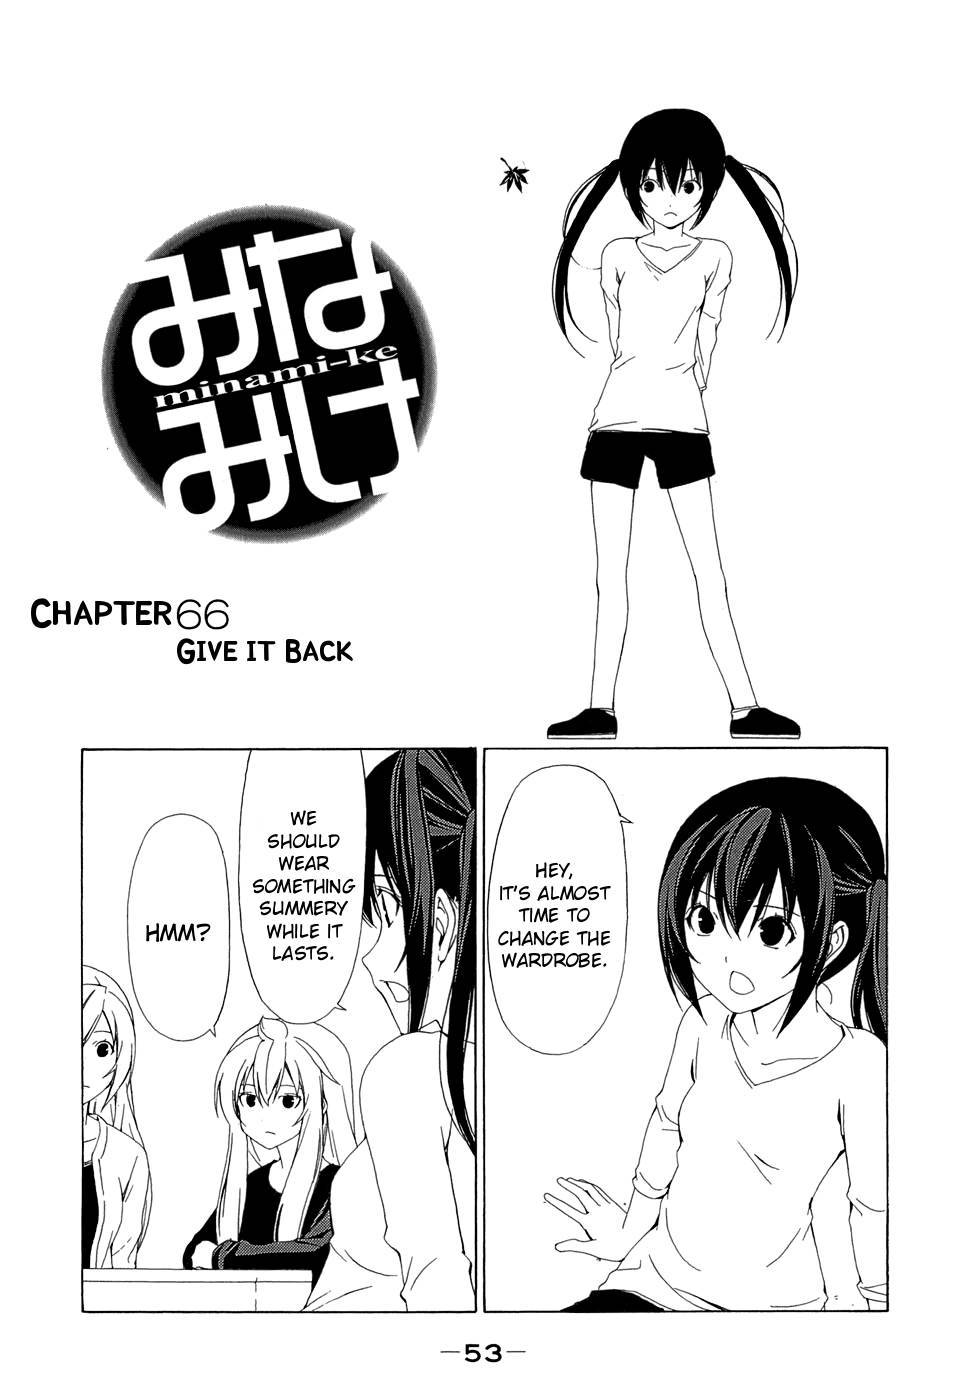 Minami-ke chapter 66 page 1